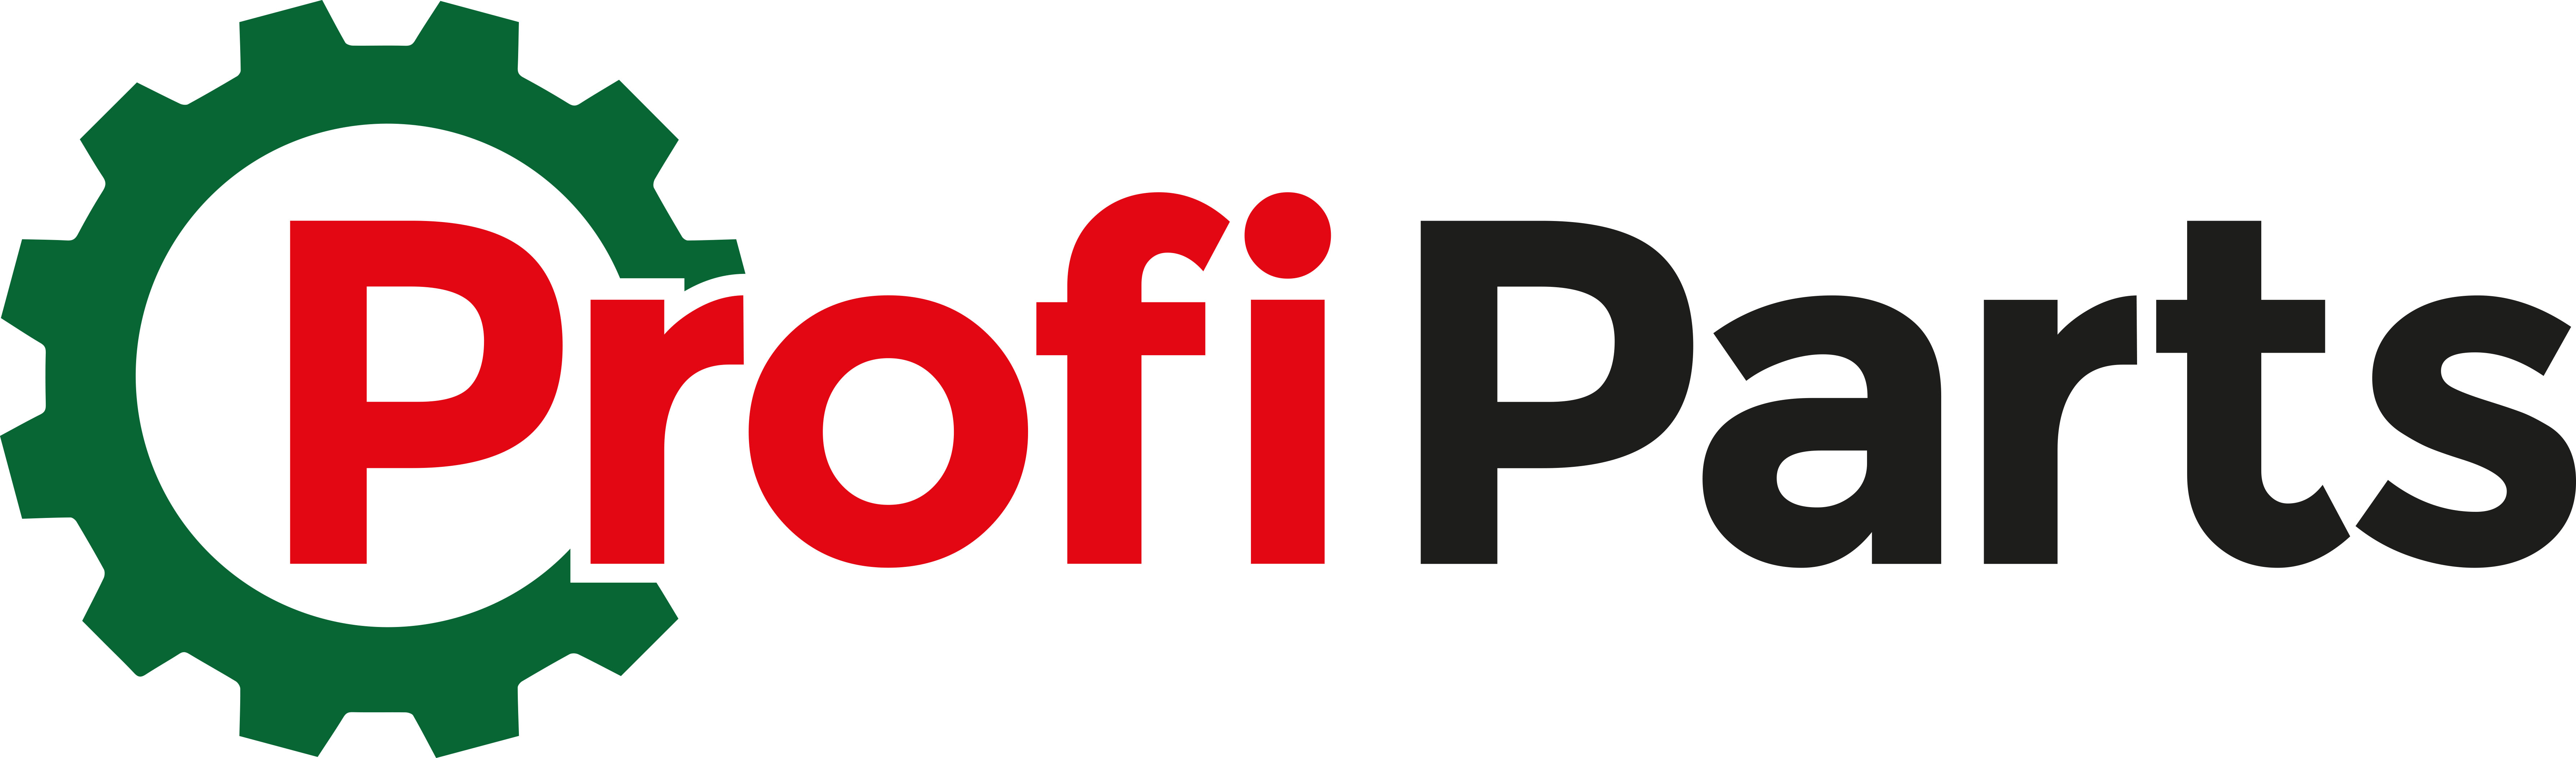 Profiparts-Logo